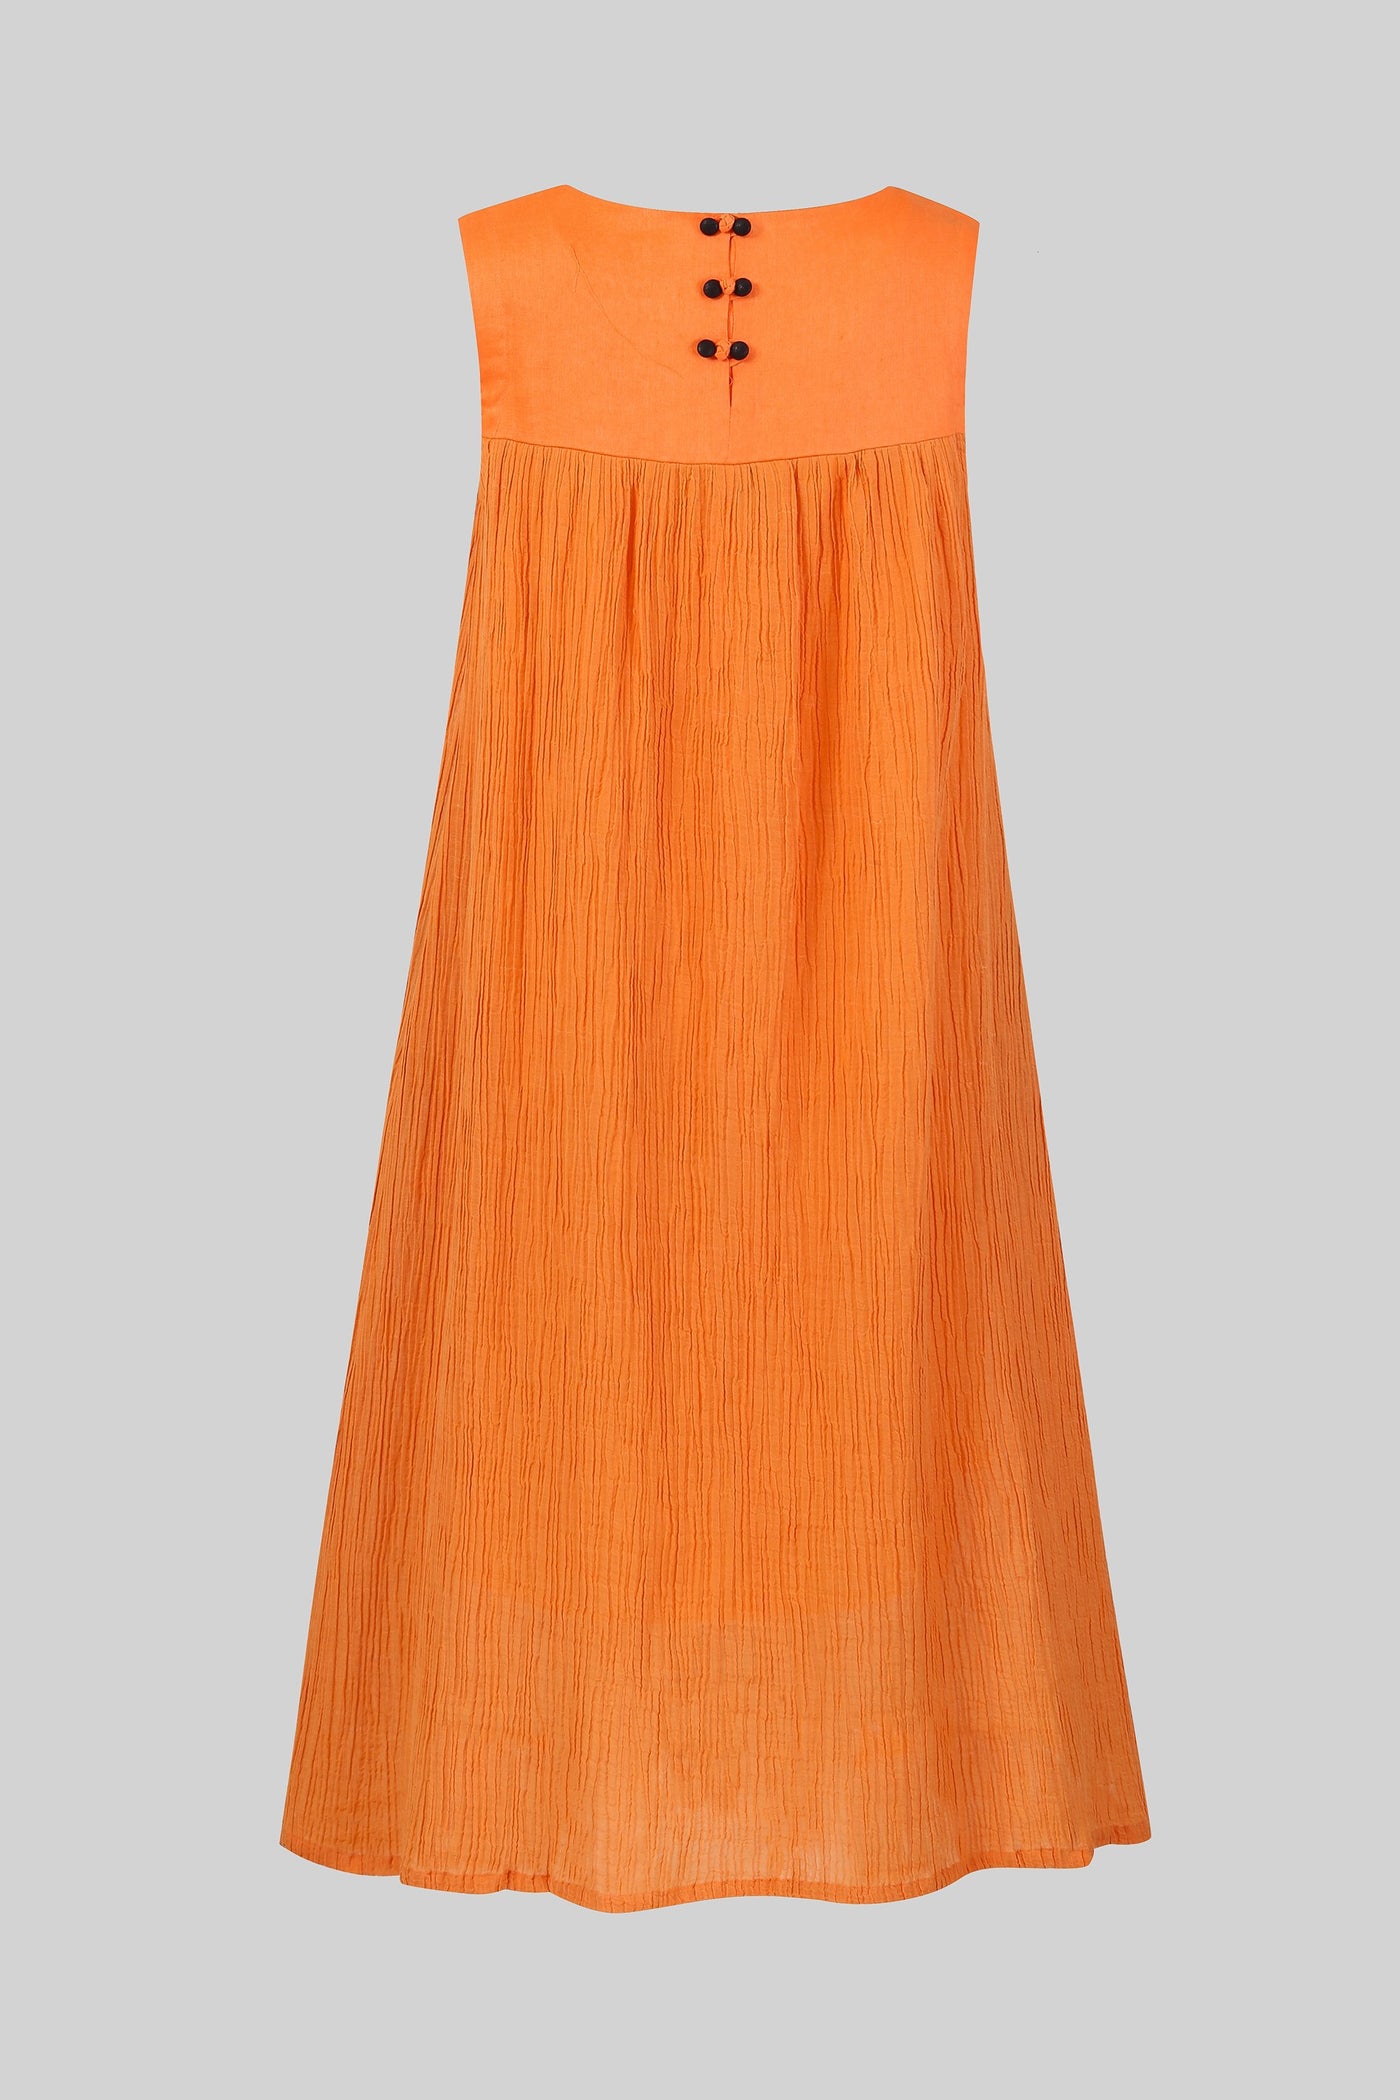 Mandarin Orange 44 |  sleeveless dress